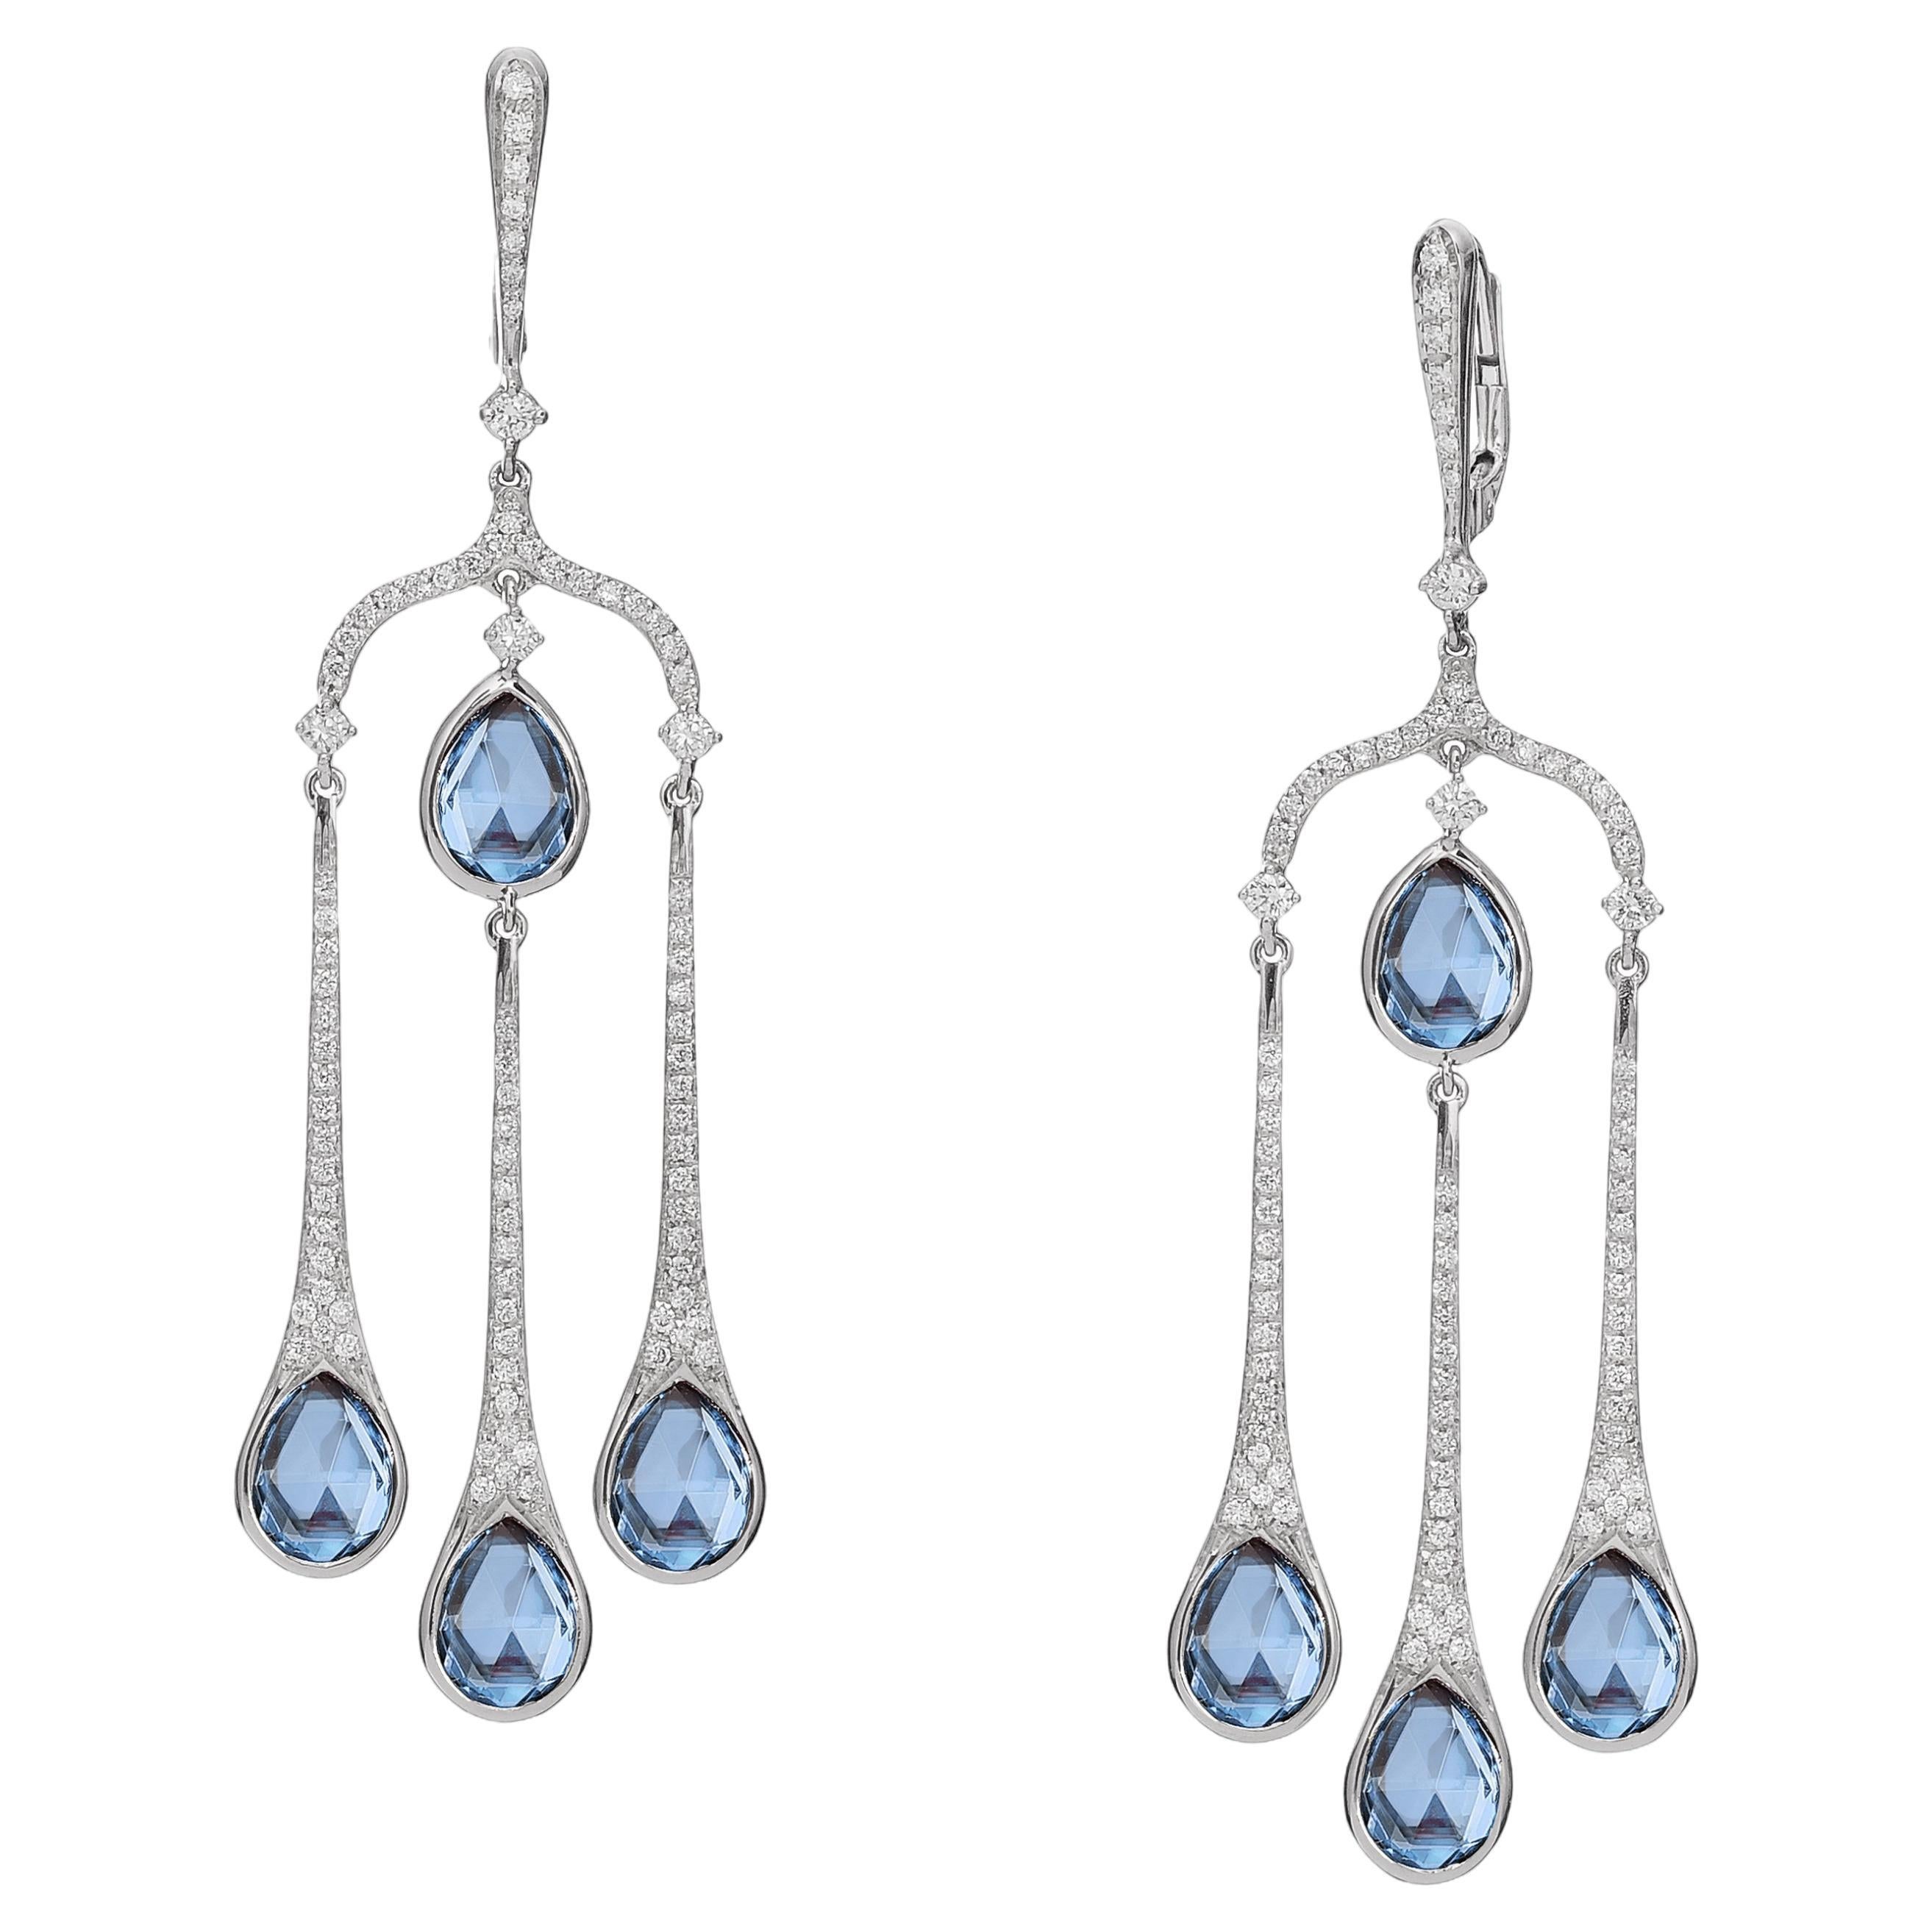 Drop Chandelier Earrings in 18k gold with Diamonds and Blue Topaz